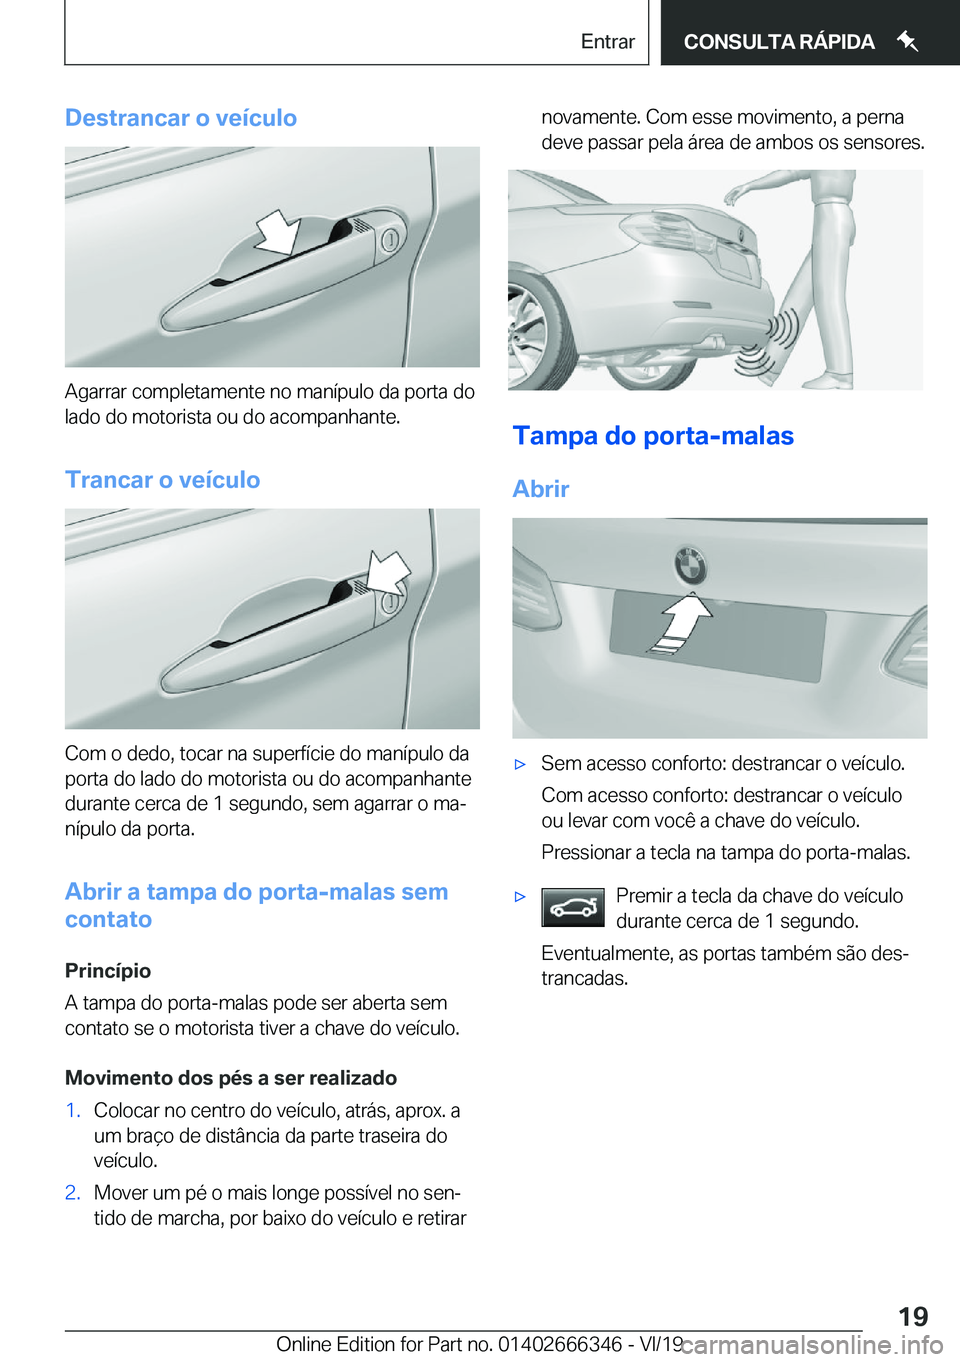 BMW 4 SERIES COUPE 2020  Manual do condutor (in Portuguese) �D�e�s�t�r�a�n�c�a�r��o��v�e�